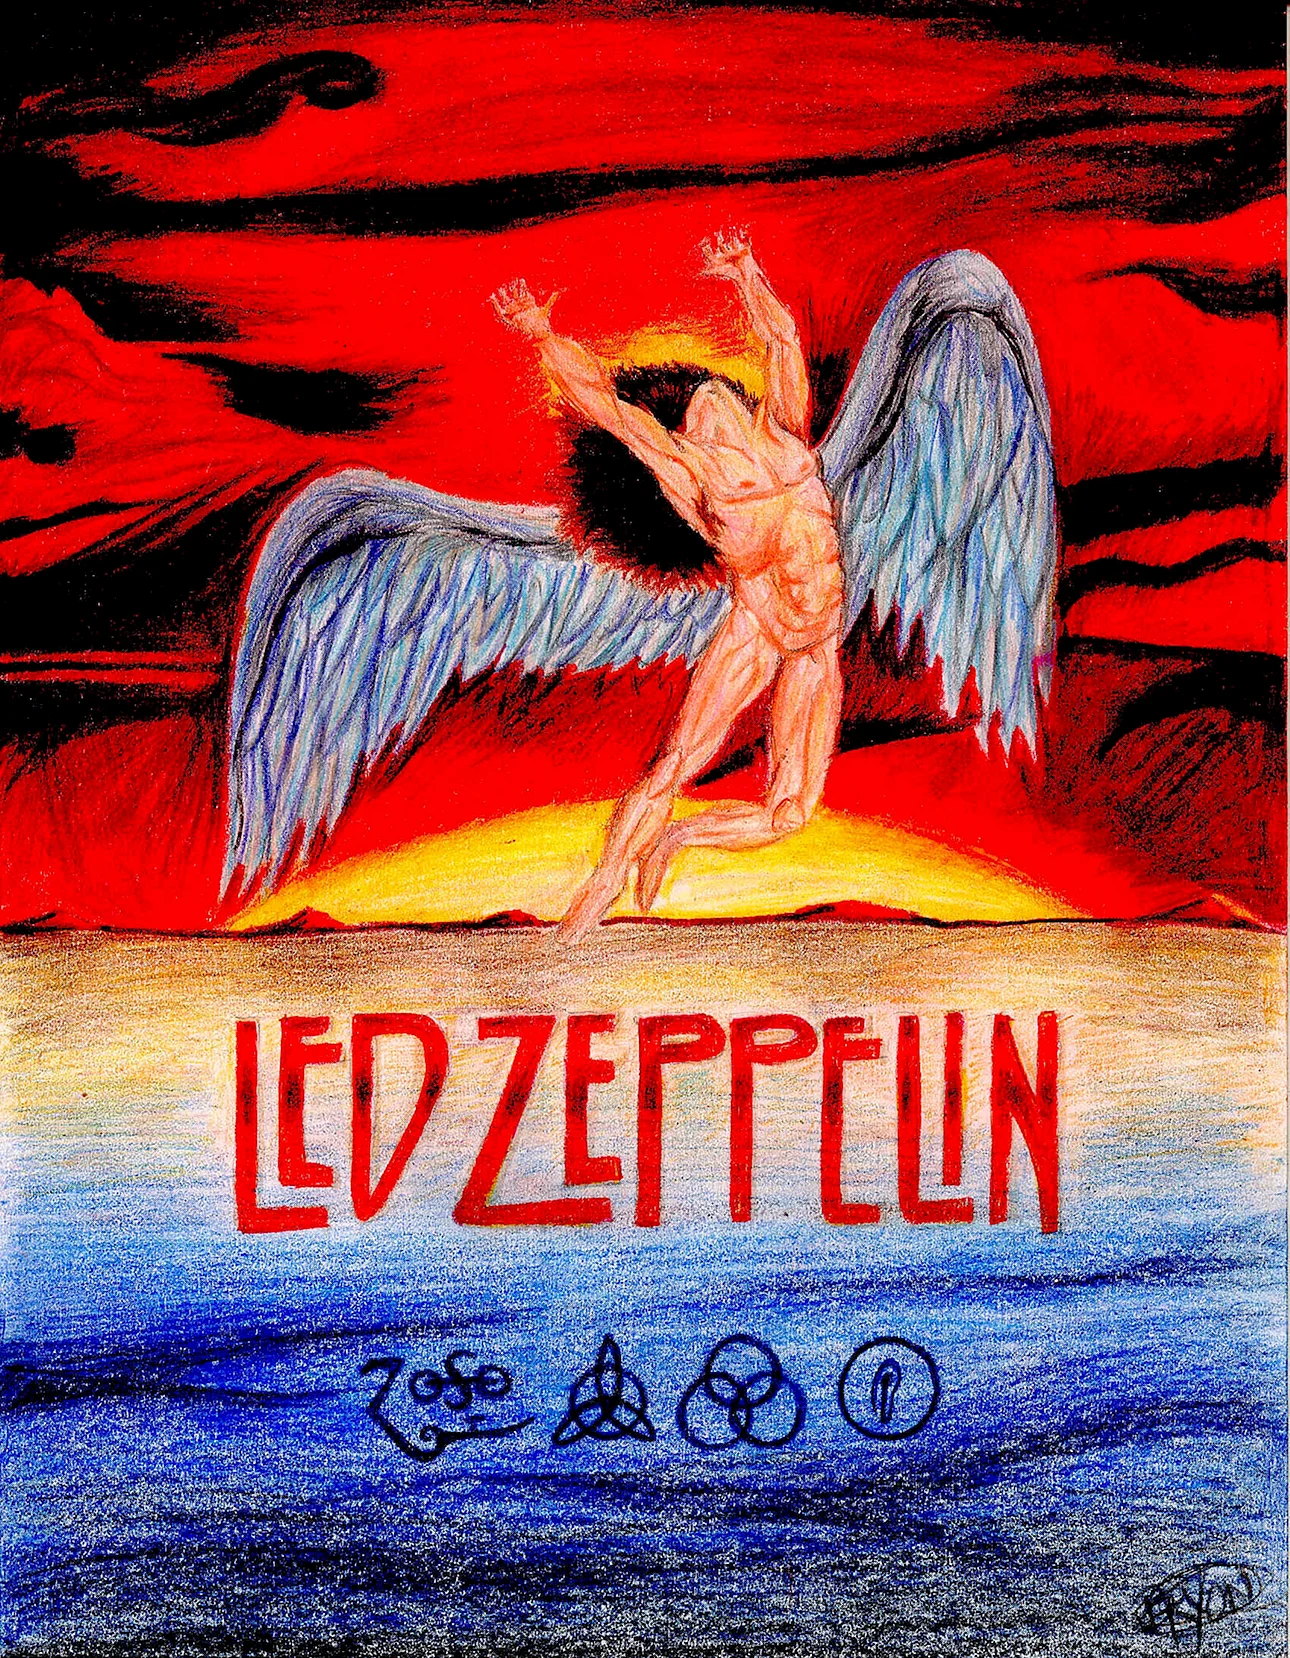 Led Zeppelin Cover Wallpaper For iPhone